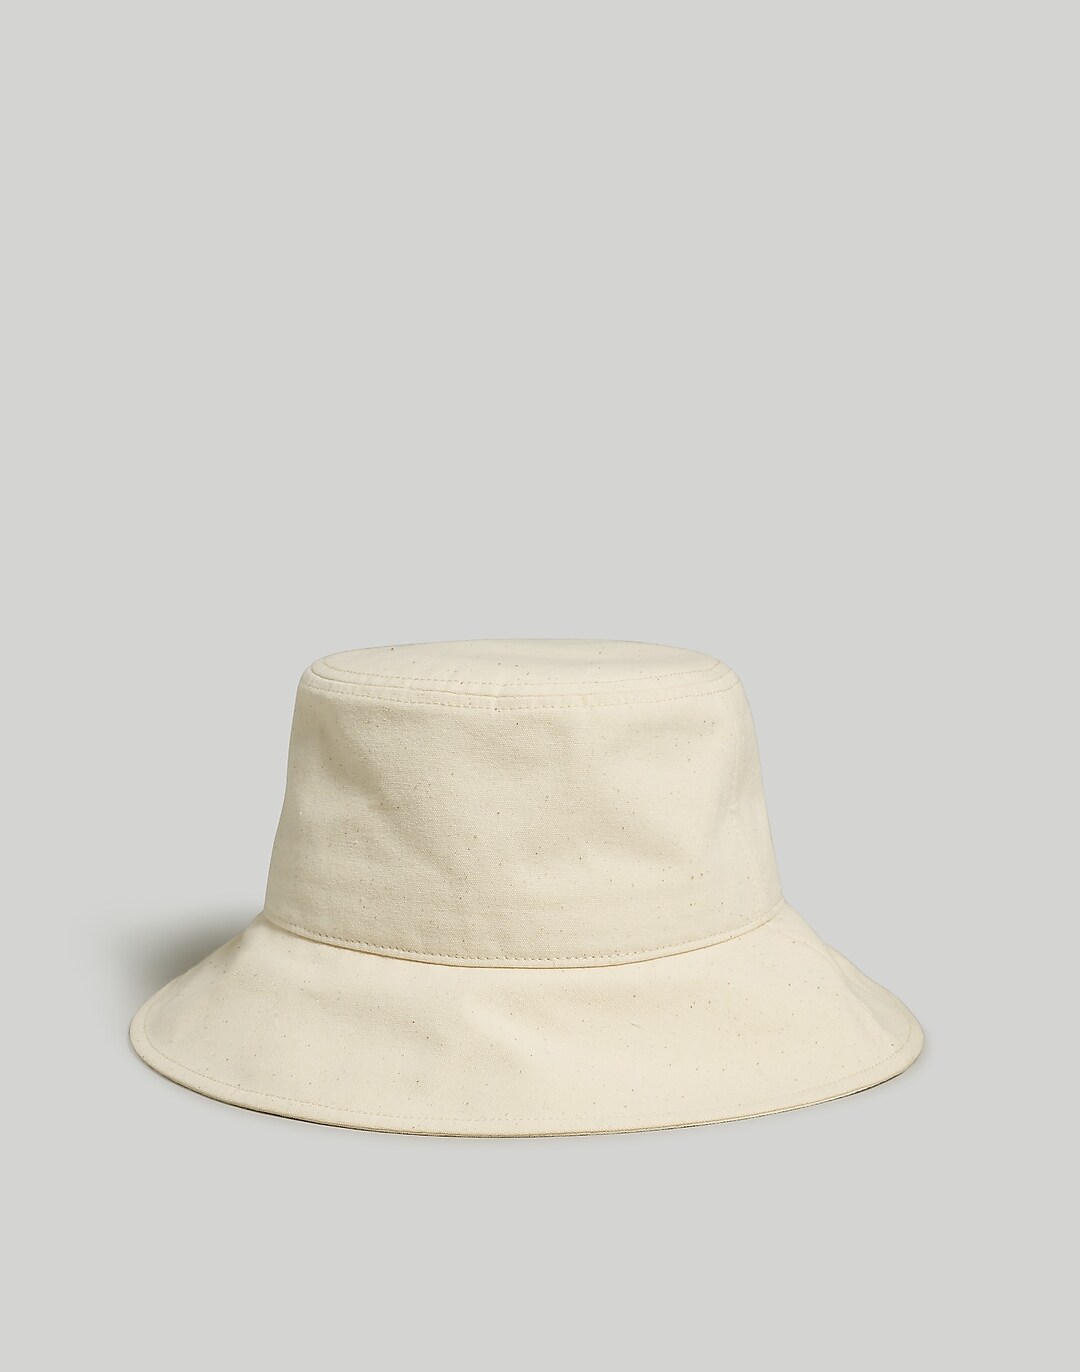 Madewell Wide-Brim Bucket Hat in Antique Cream - Size S-M